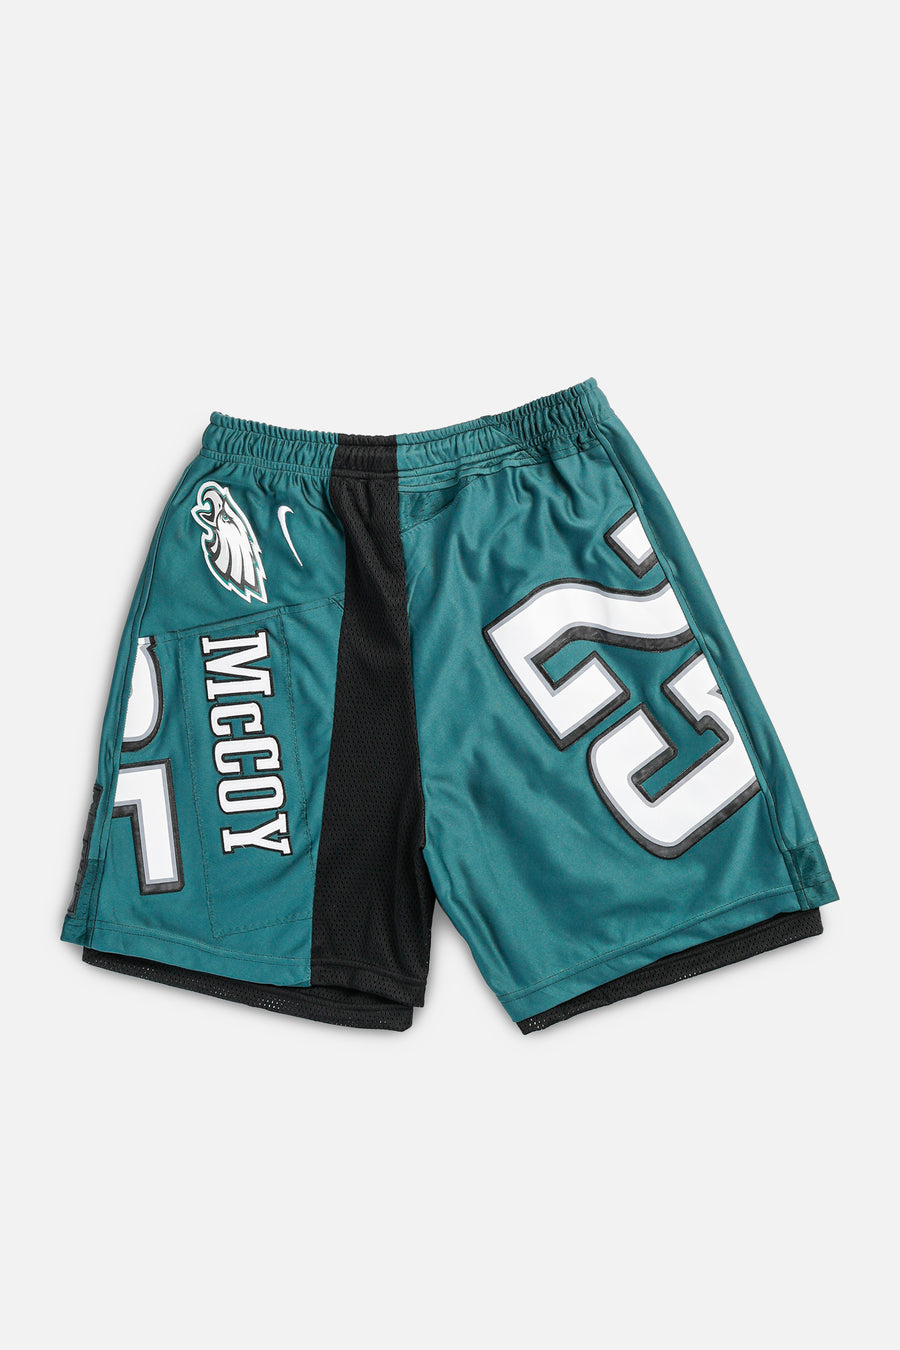 Unisex Rework Philadelphia Eagles NFL Jersey Shorts - M